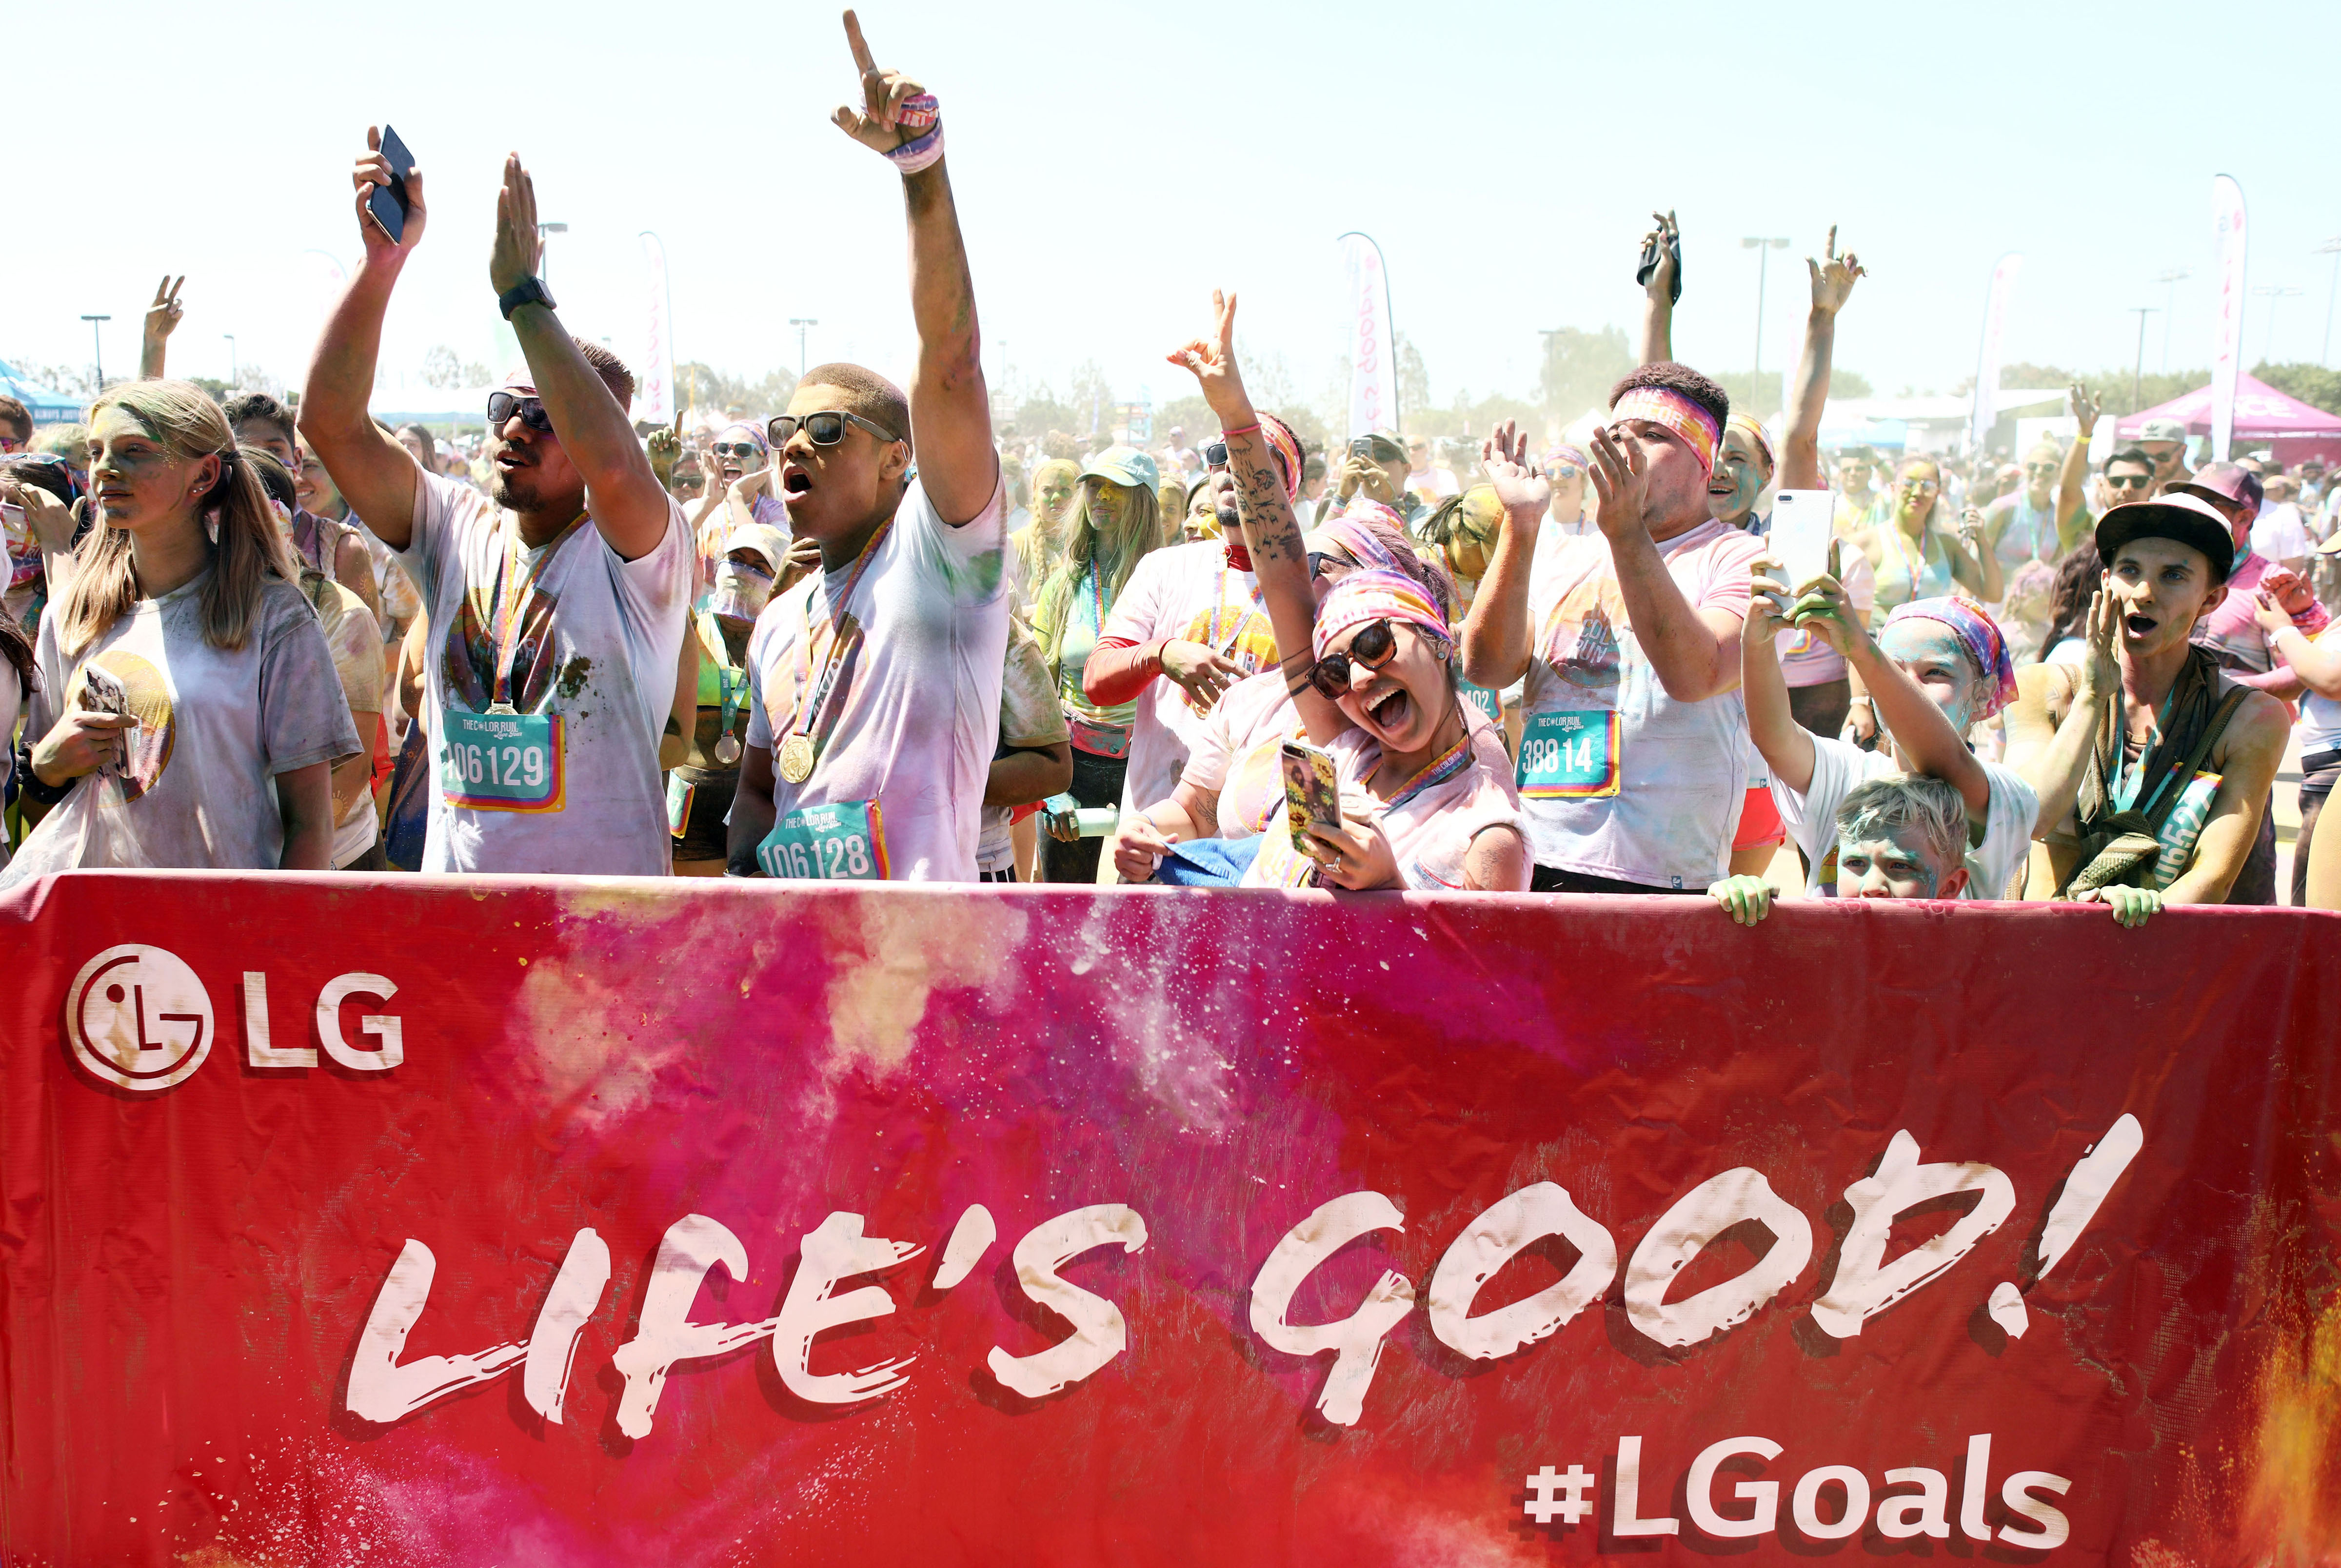 LG Lifes Good Color Run